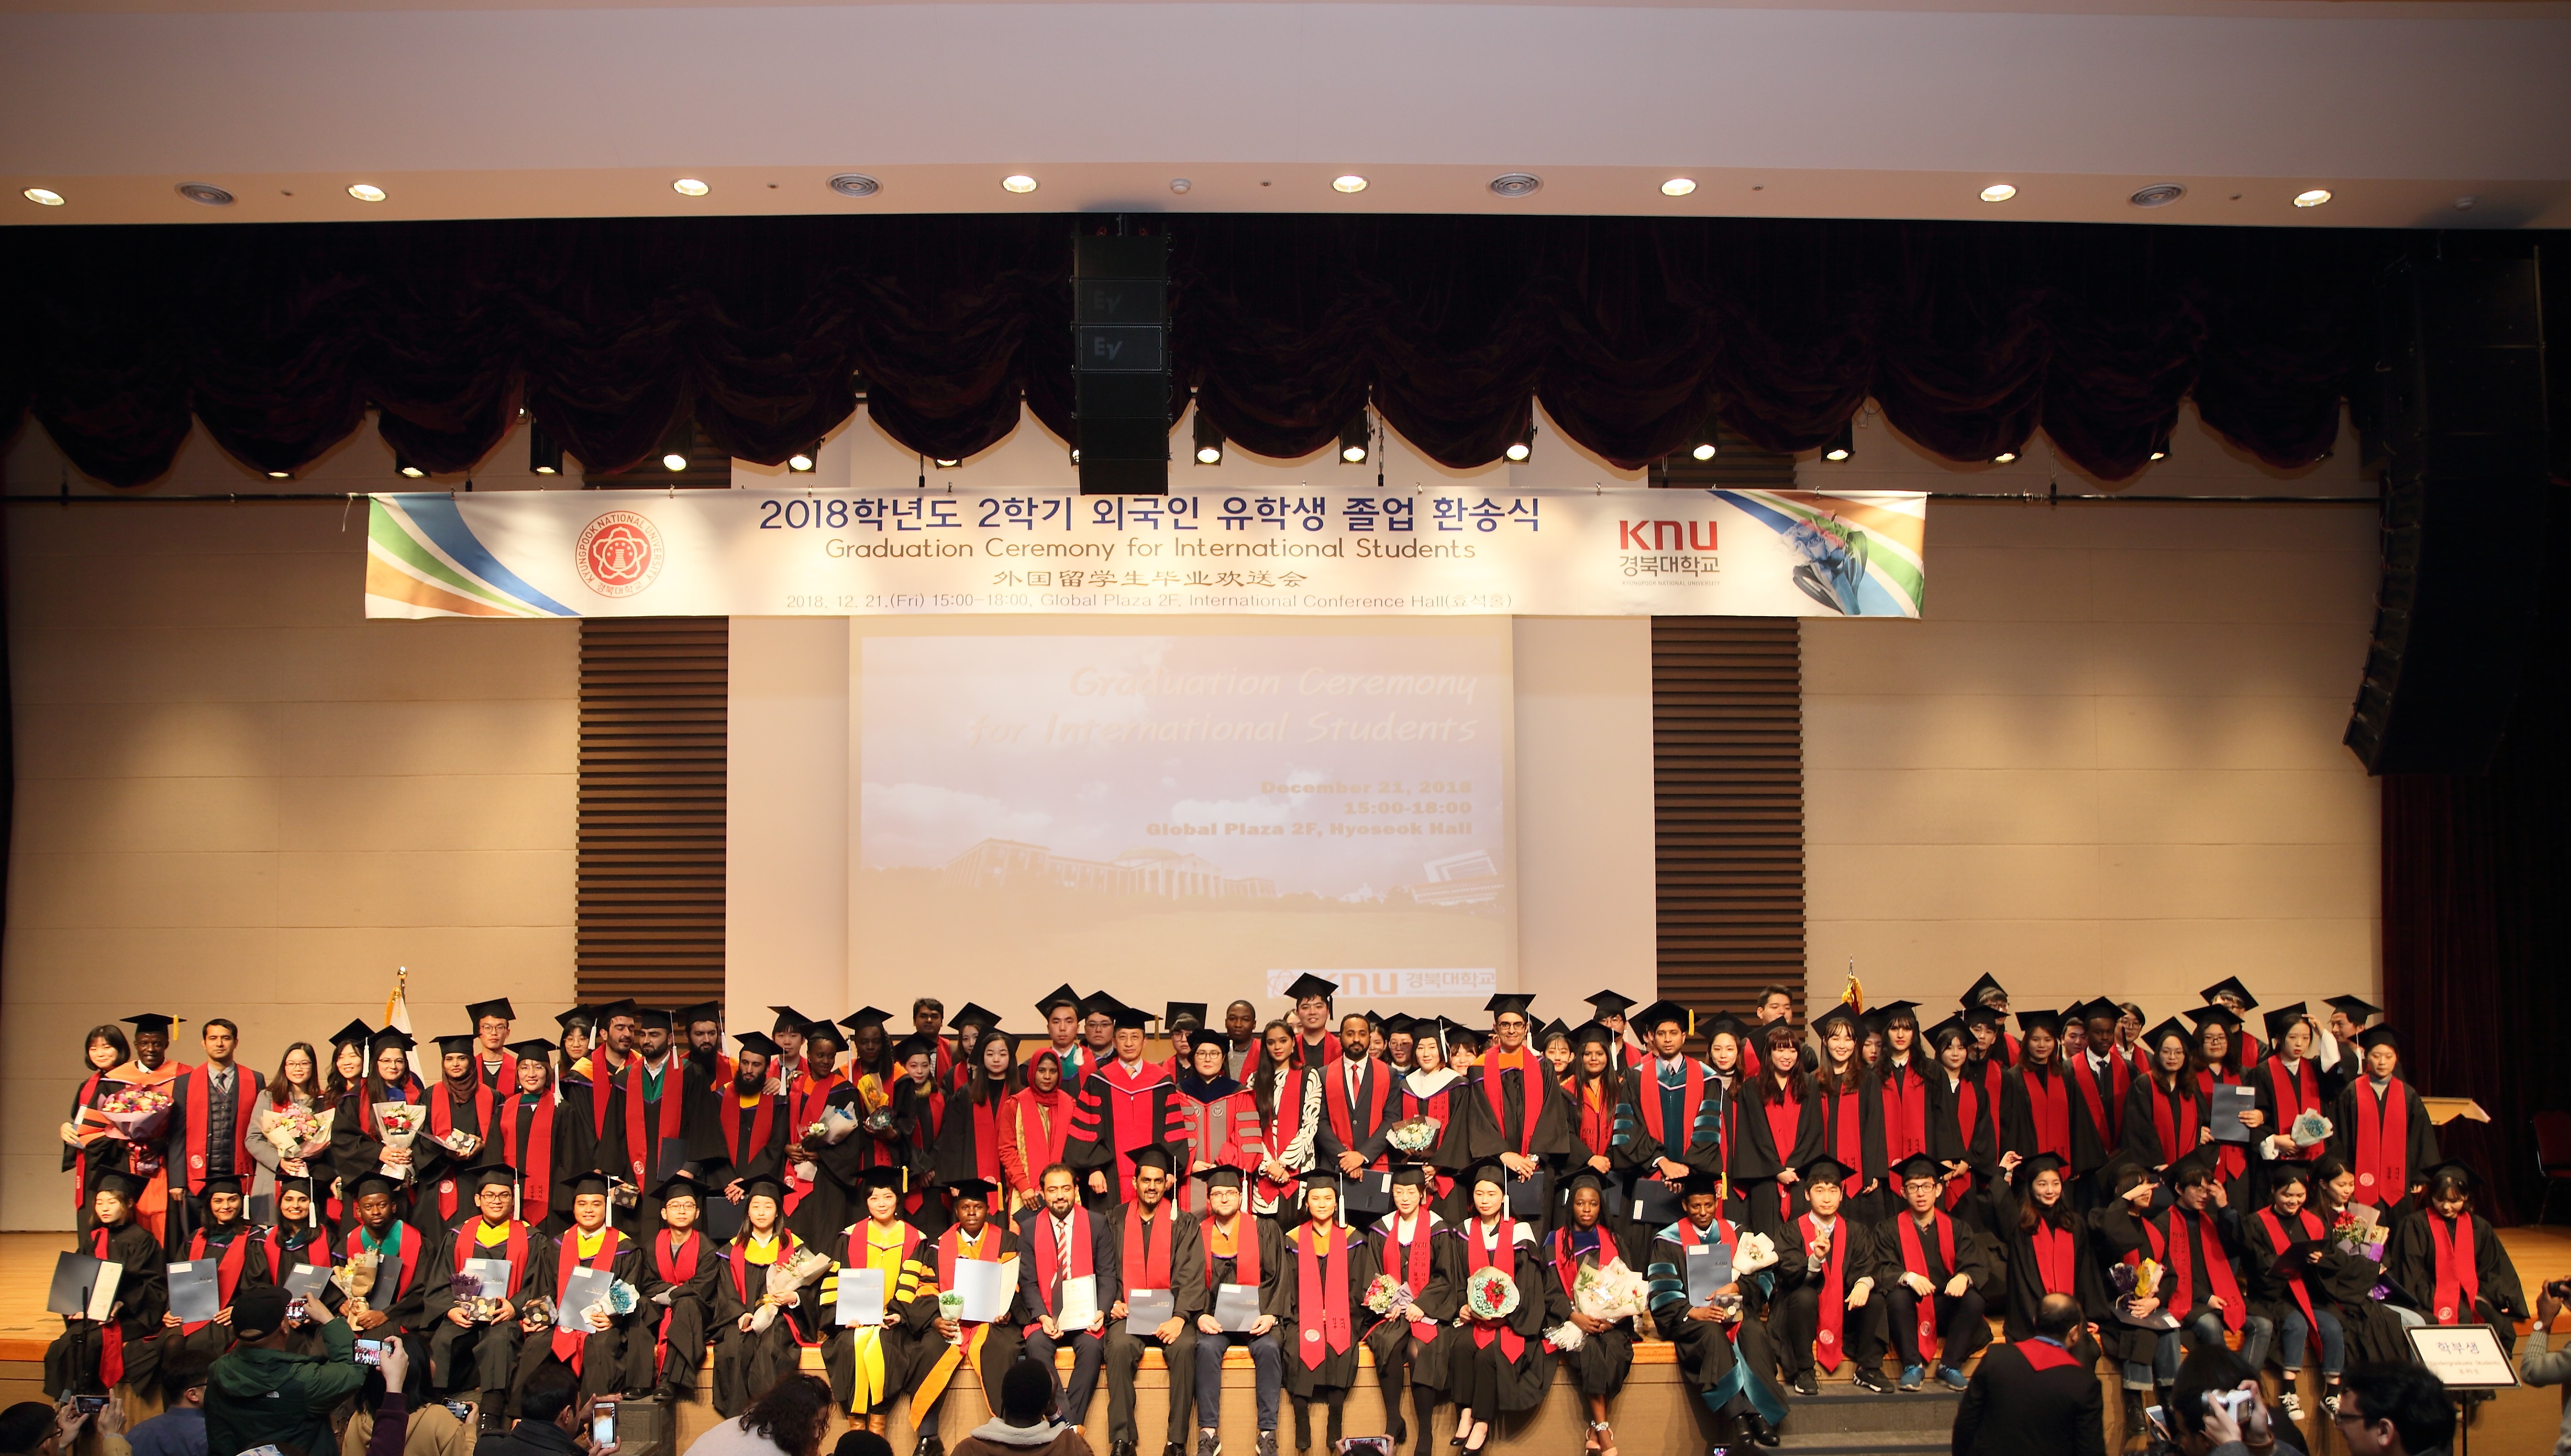 Graduation Ceremony for International Students 관련 이미지입니다